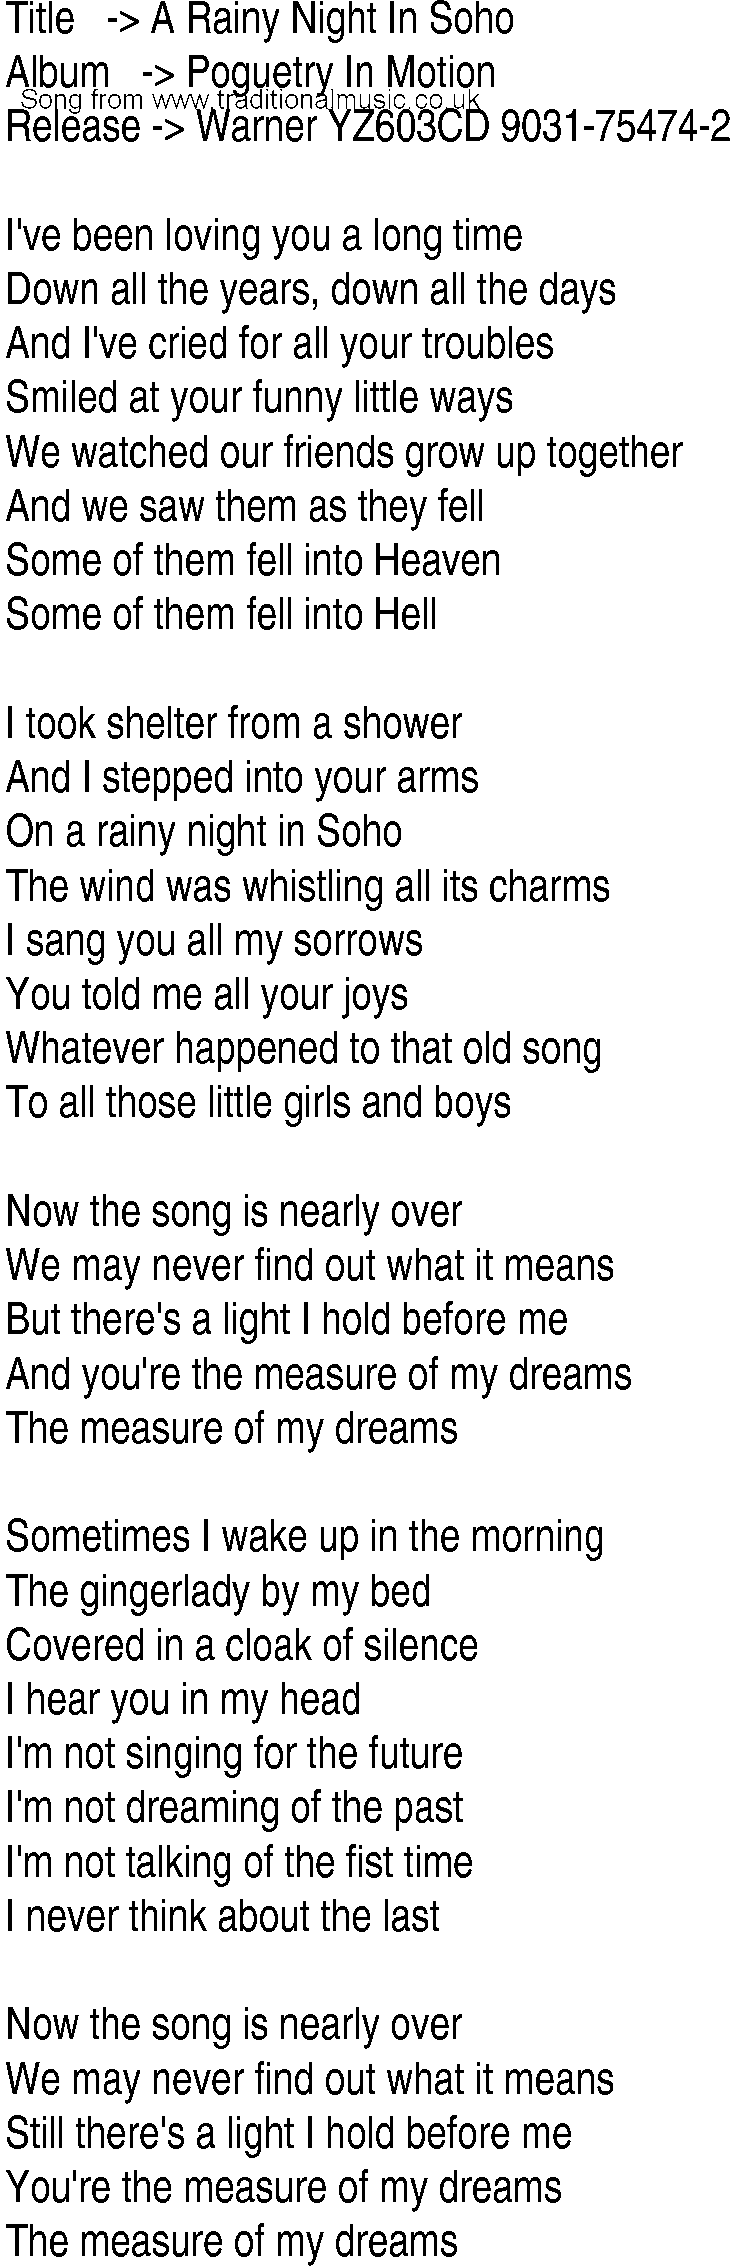 Irish Music Song And Ballad Lyrics For A Rainy Night In Soho